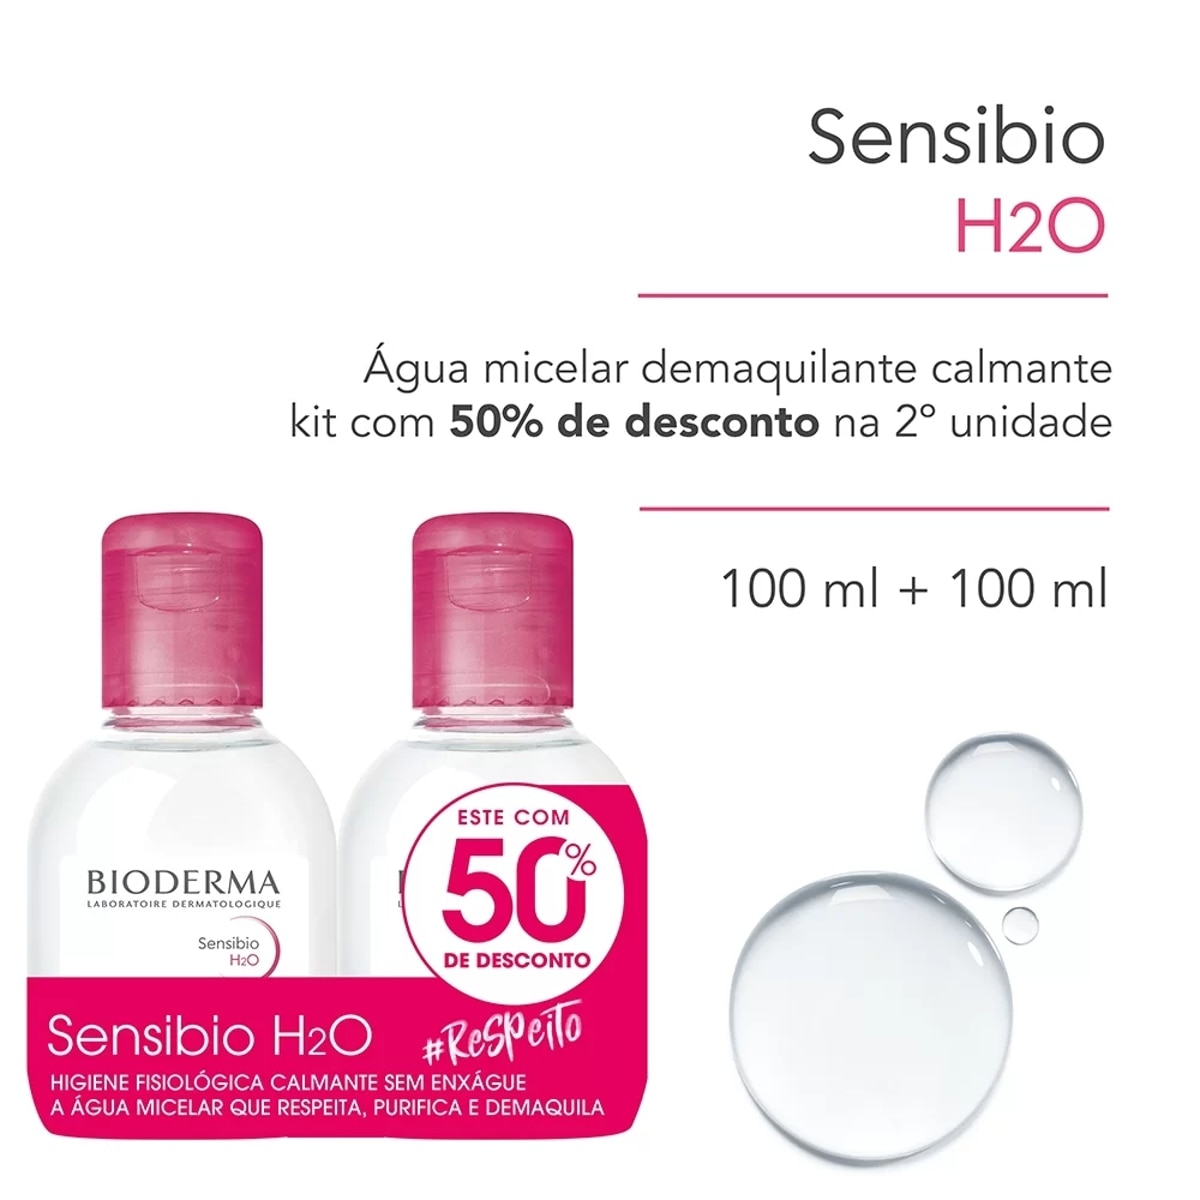 Kit Agua Micelar Dermatologica Bioderma Sensibio H2O 100ml + 100ml 50% de Desconto